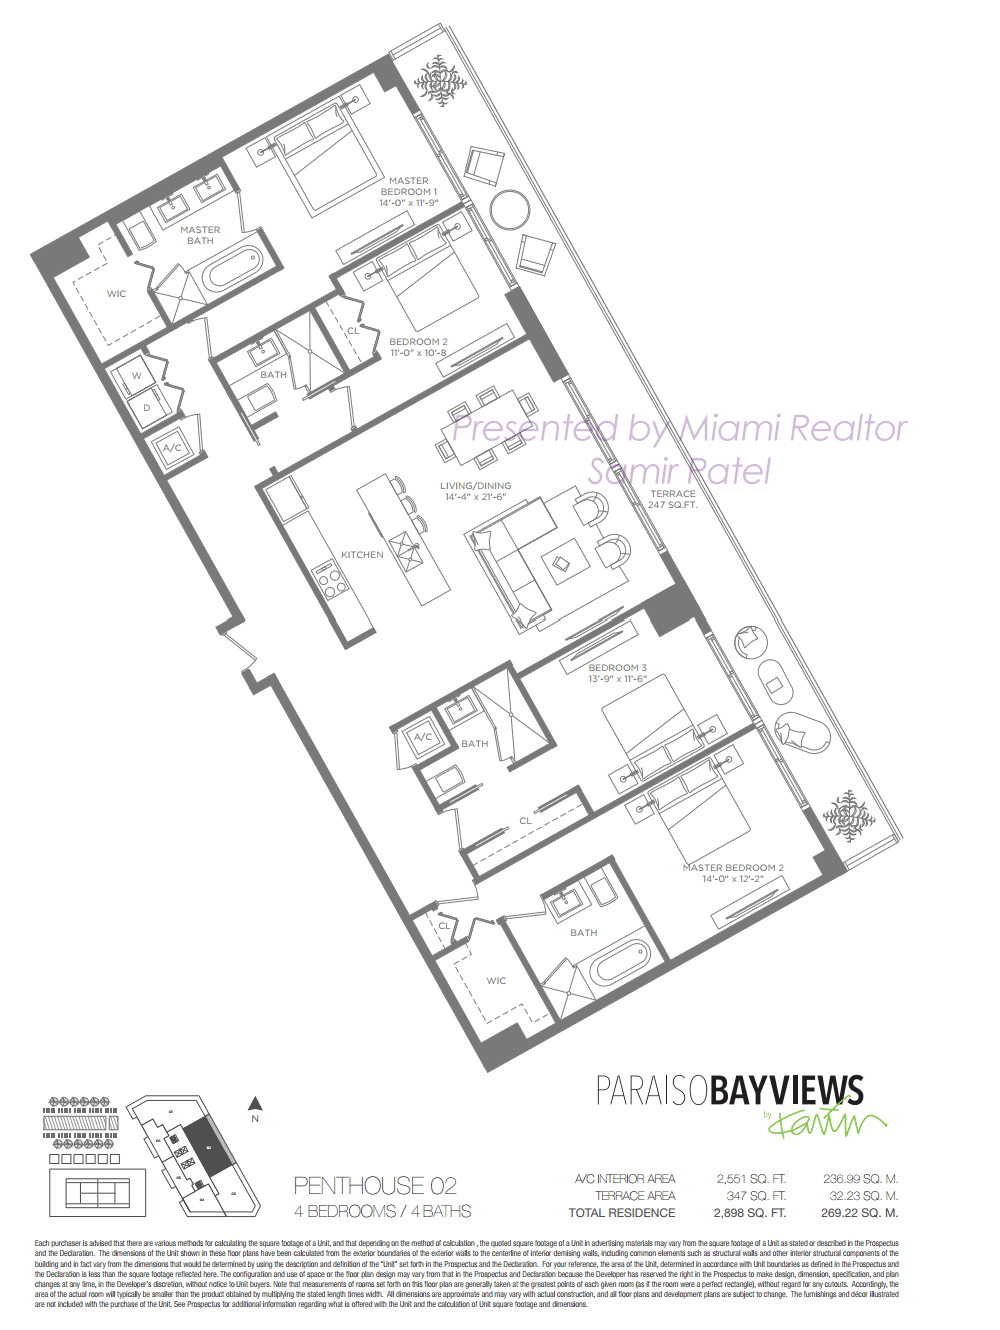 Floorplan of Paraiso Bayviews Condominium of Penthouse 02 Line in Building